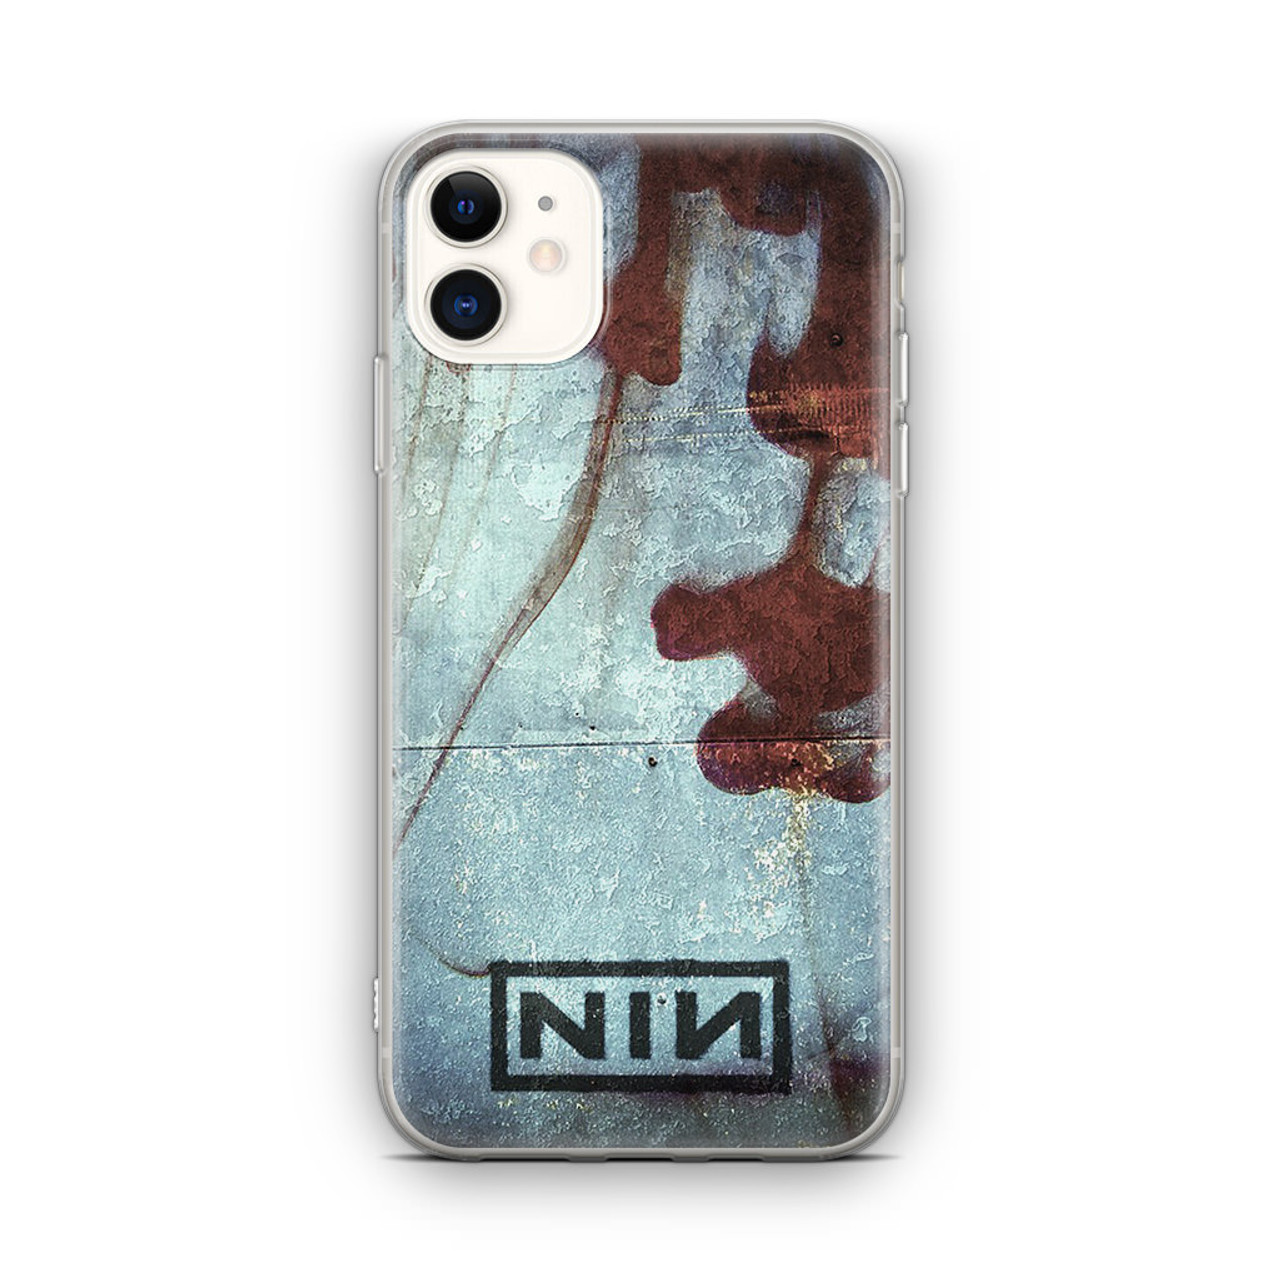 Nine Inch Nails, San Francisco - zoltron